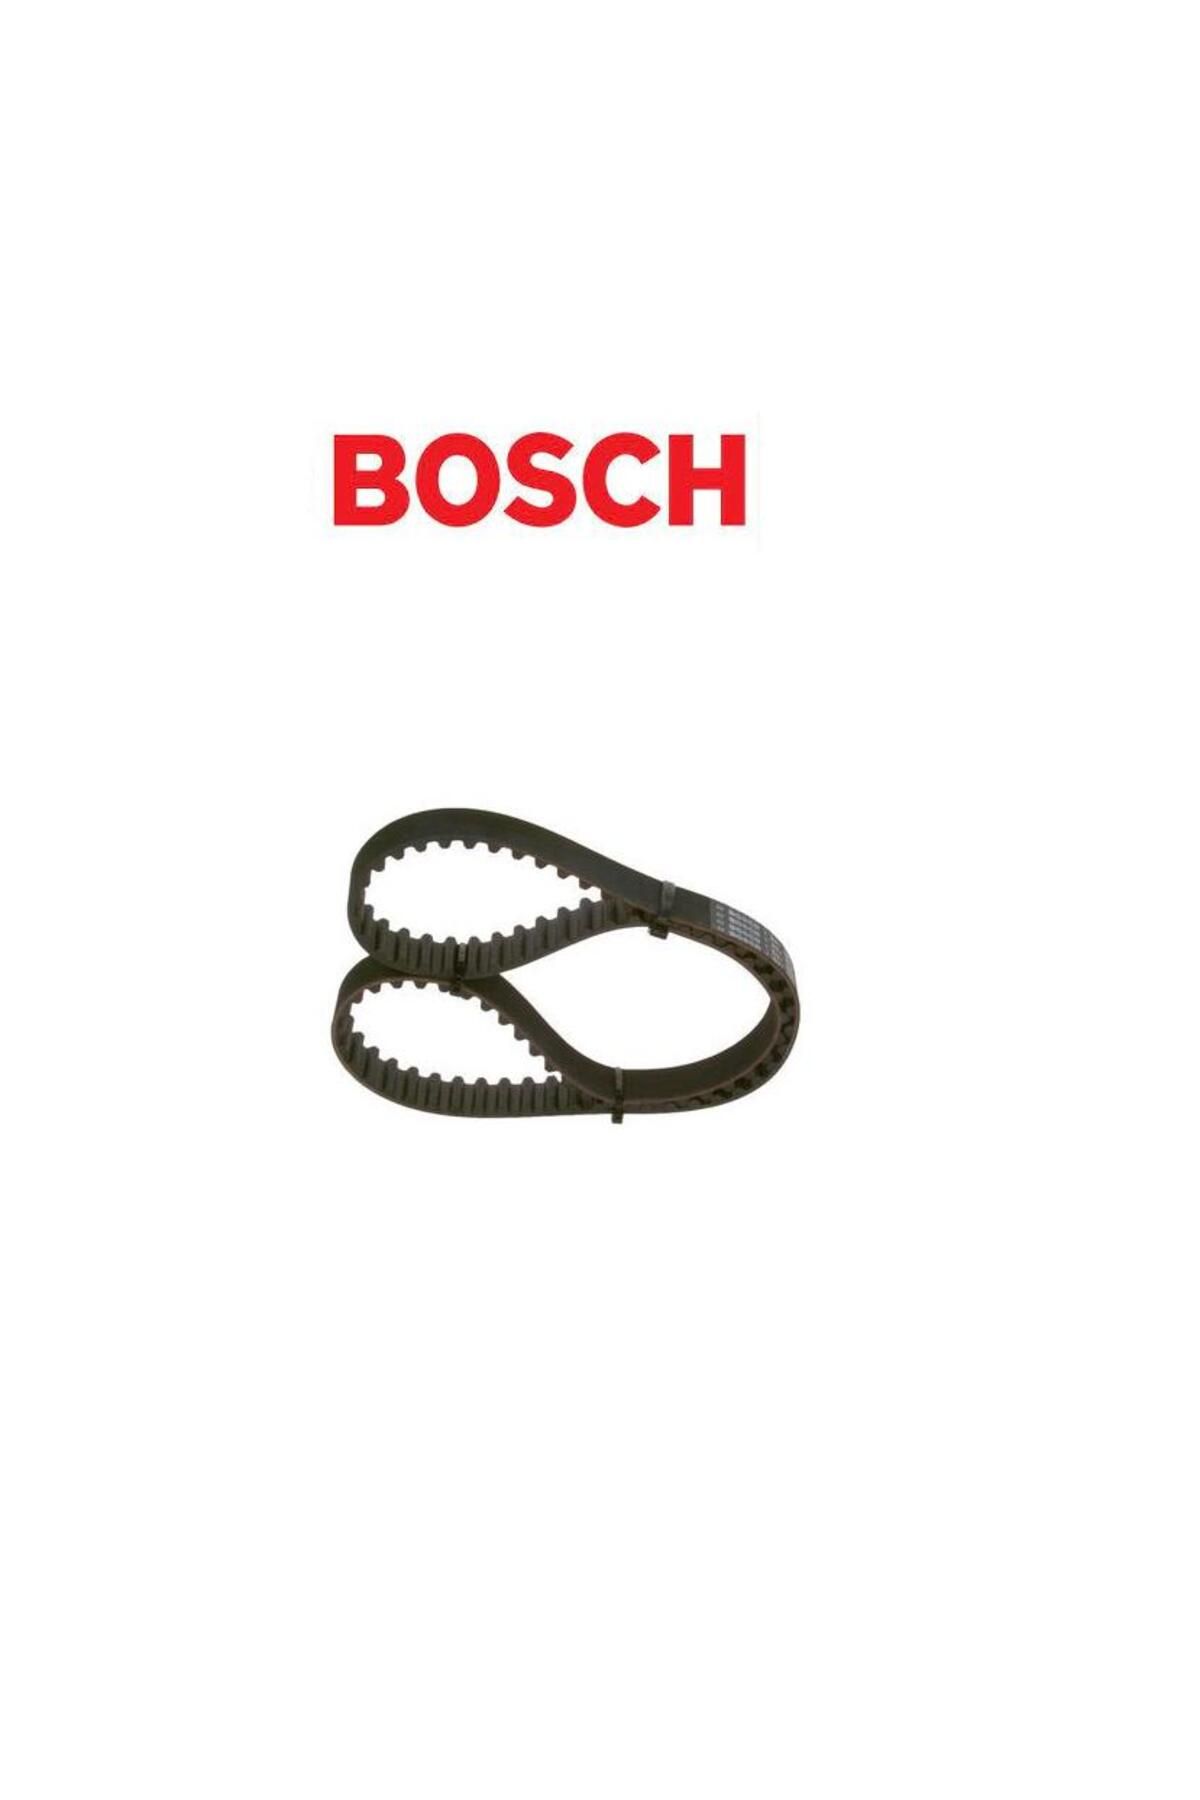 Bosch TRİGER KAYIŞI HYUNDA ACCENT 1 ELANTRA 2 CARENS 2 1,3 1,5 2431222010 1987949142